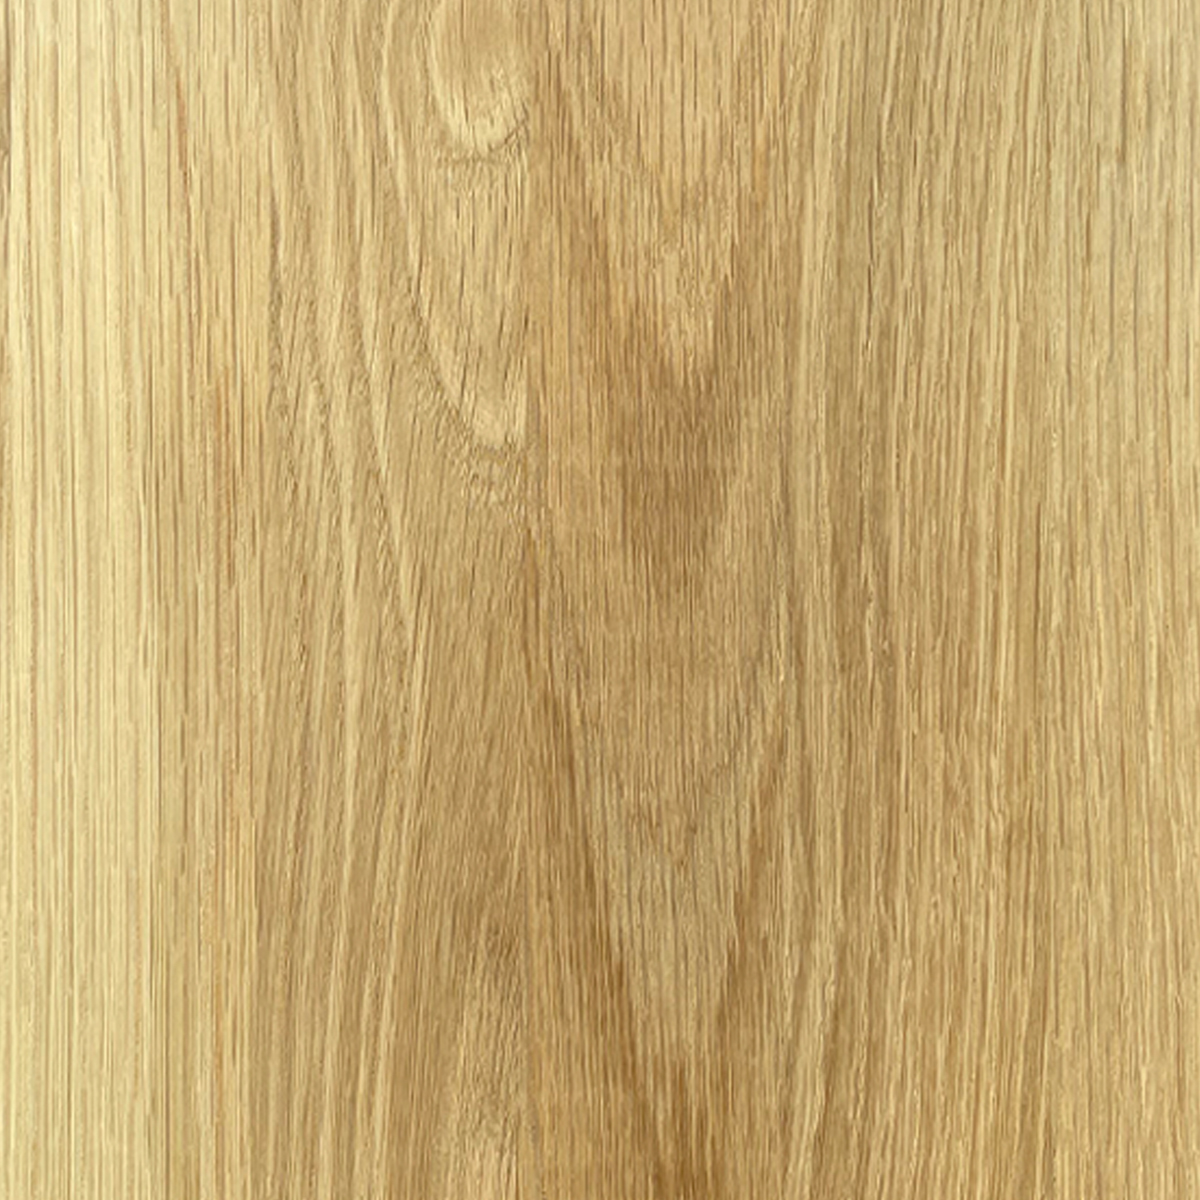 Thớt chặt | JYSK Hagfors | gỗ sồi | D40xR28xC2.8cm